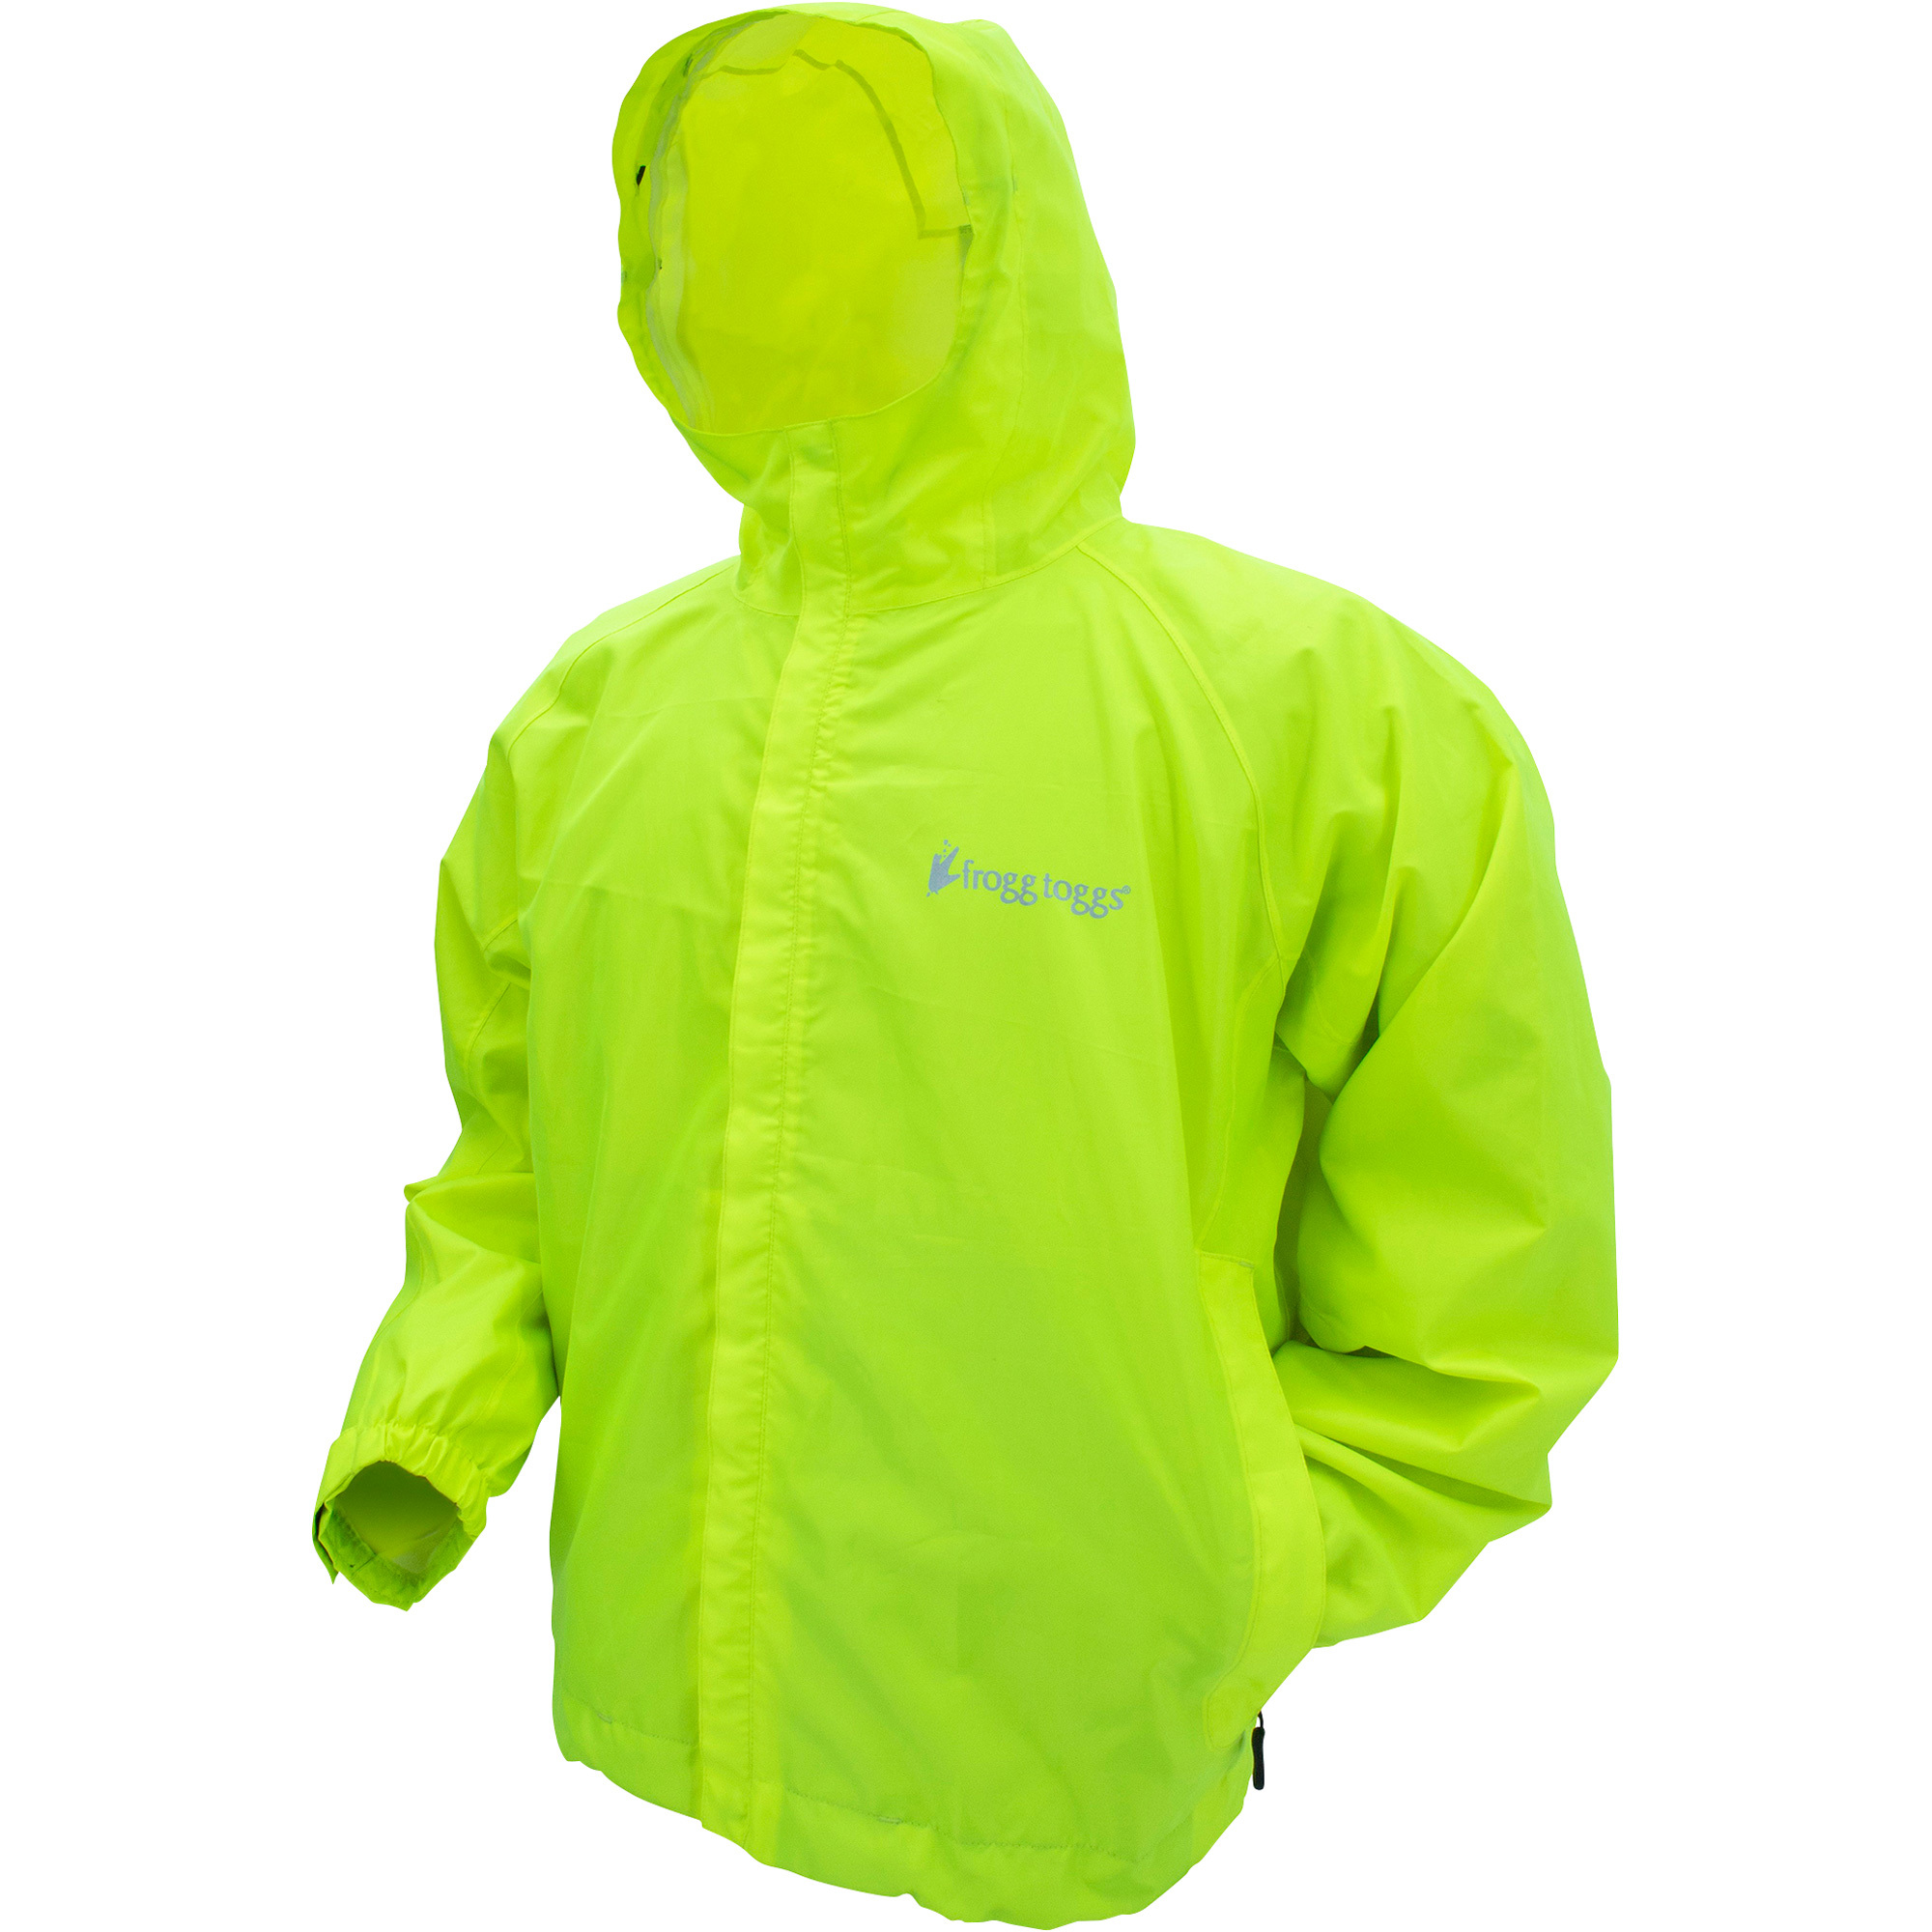 Frogg Toggs Men's Stormwatch Jacket â Lime, XL, Model SW62123-48XL